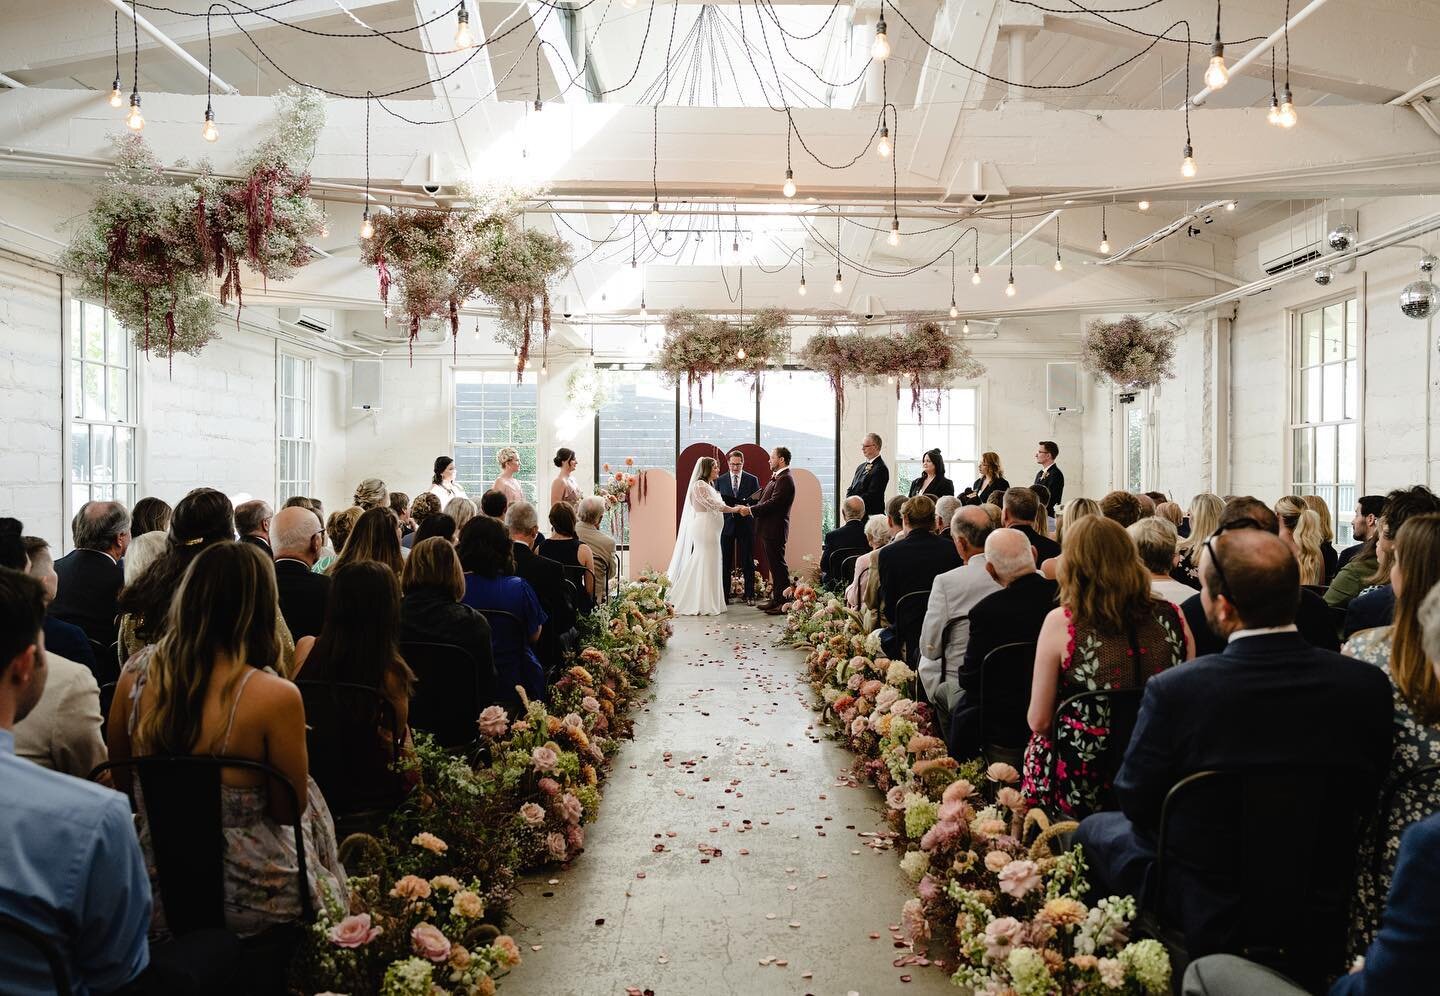 Ceremony flower wonderland!
.
.
Photographer: @savannasturkiephoto 
Florist: @carolineworthdesign 
Planner: @drakesocialevents 
.
.
.
#upstairsatlanta #wedding #ceremony #weddingceremony #atlantawedding #atlantaweddingceremony #atlantavenue #atlantaw